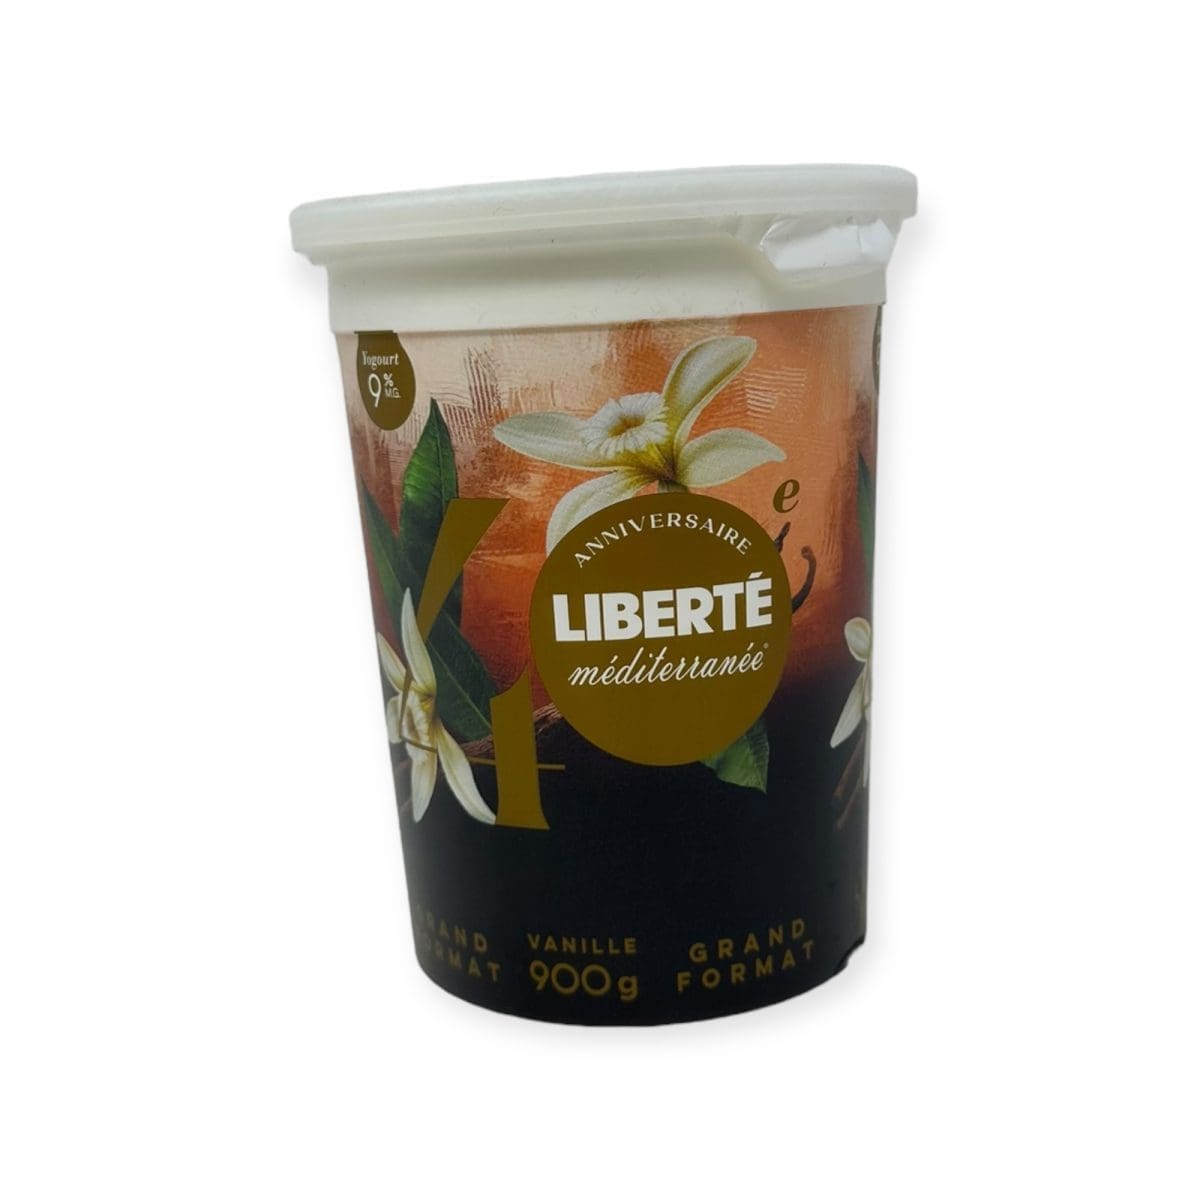 Liberte Anniversary Mediterranee Vanilla (900g)